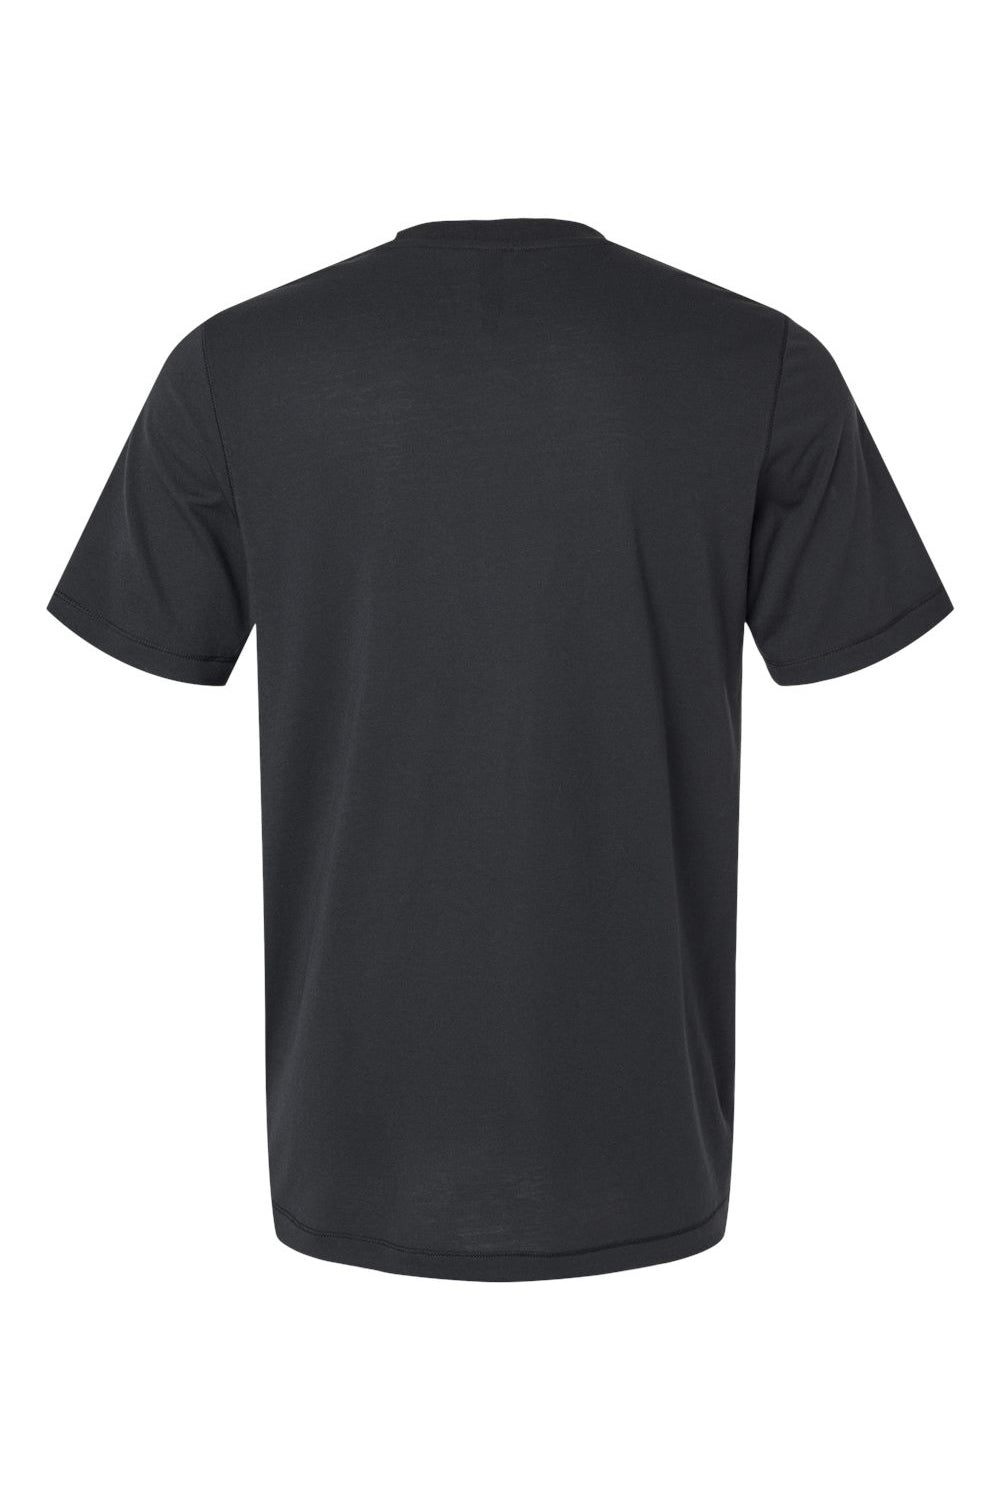 Adidas A556 Mens Short Sleeve Crewneck T-Shirt Black Flat Back